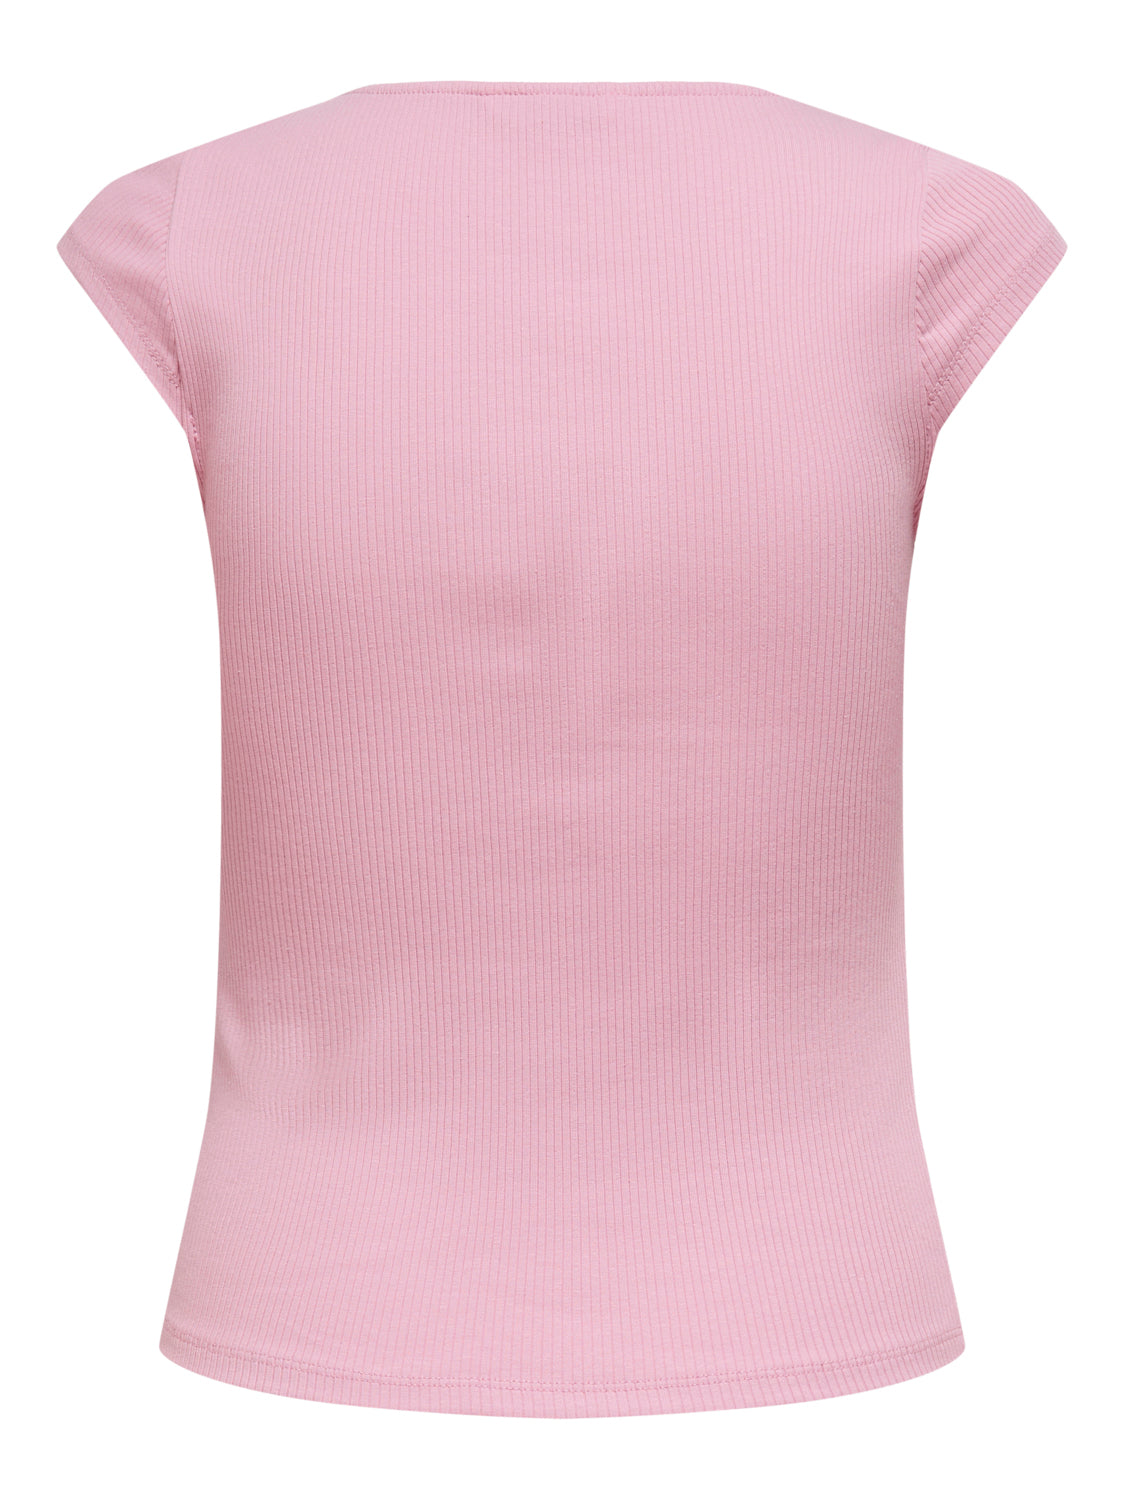 ONLANOUK T-Shirts & Tops - Soft Pink